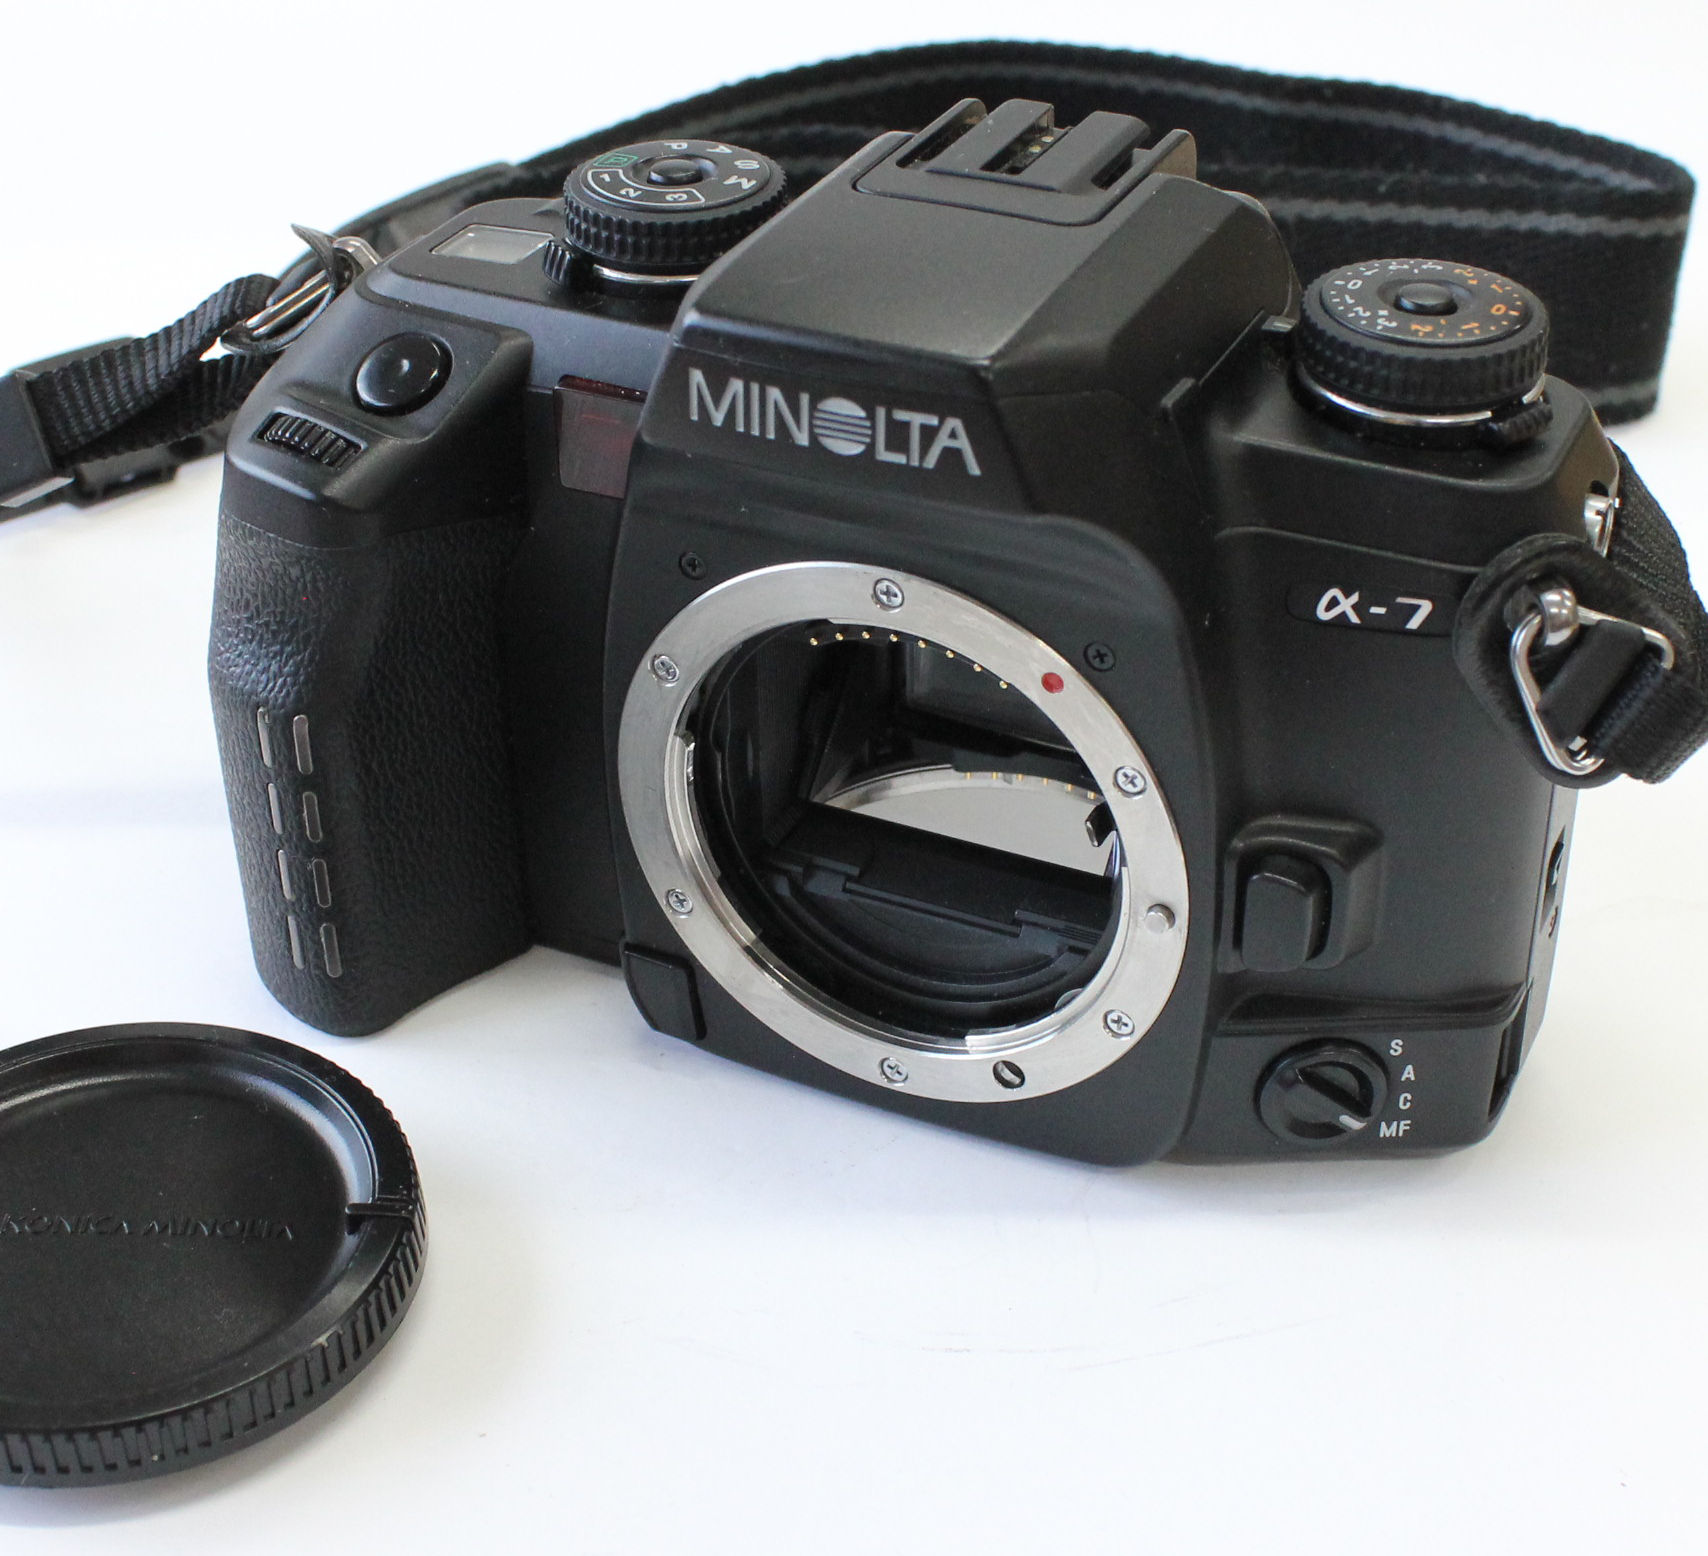 Japan Used Camera Shop | [Excellent+++++] Minolta Maxxum 7 α-7 35mm Film Camera Body from JAPAN